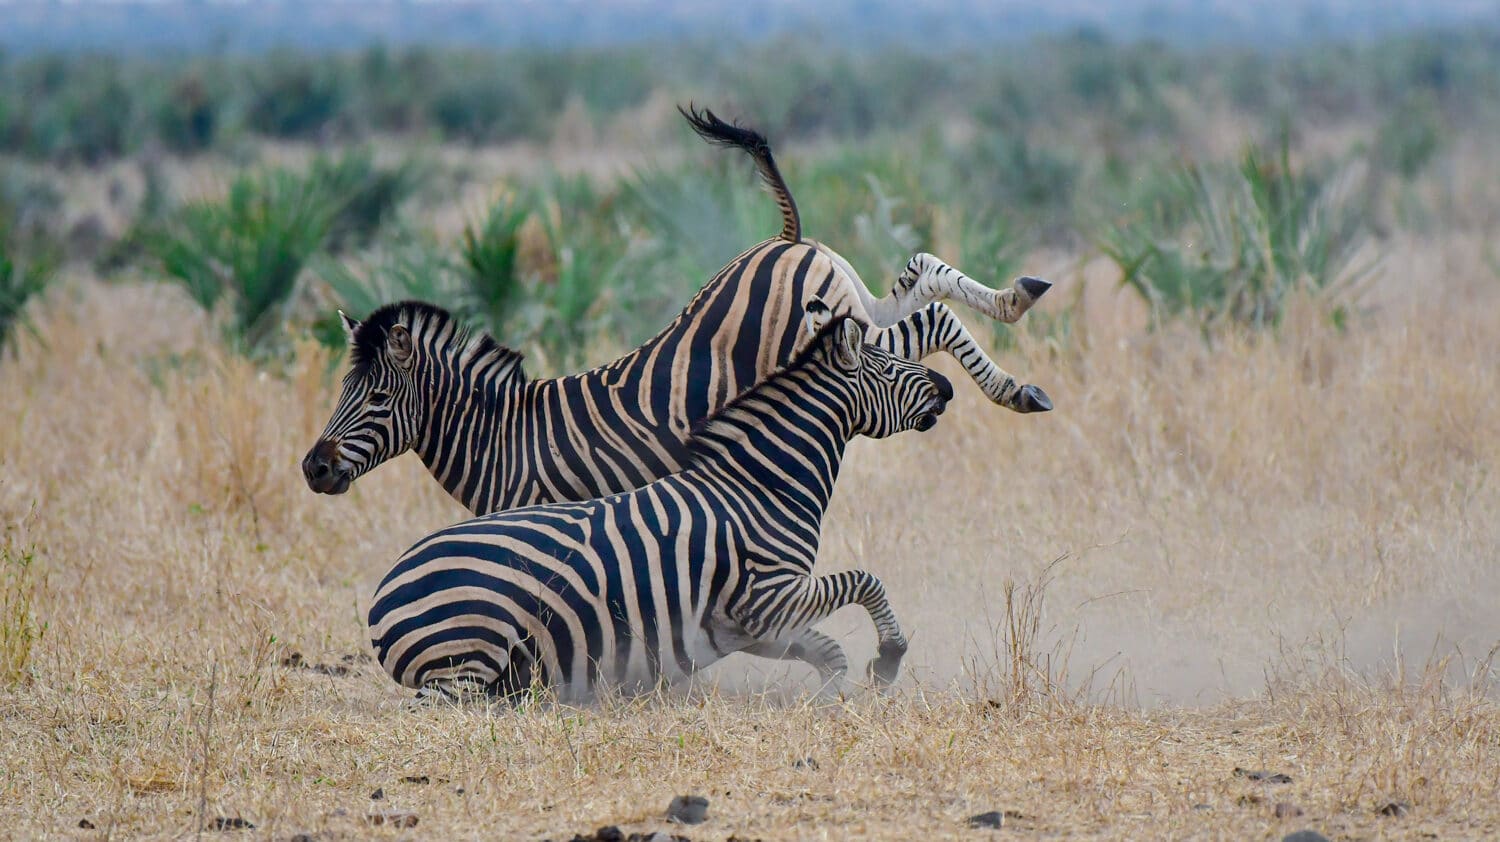 Zebras Fighting - Battle of the Stripes